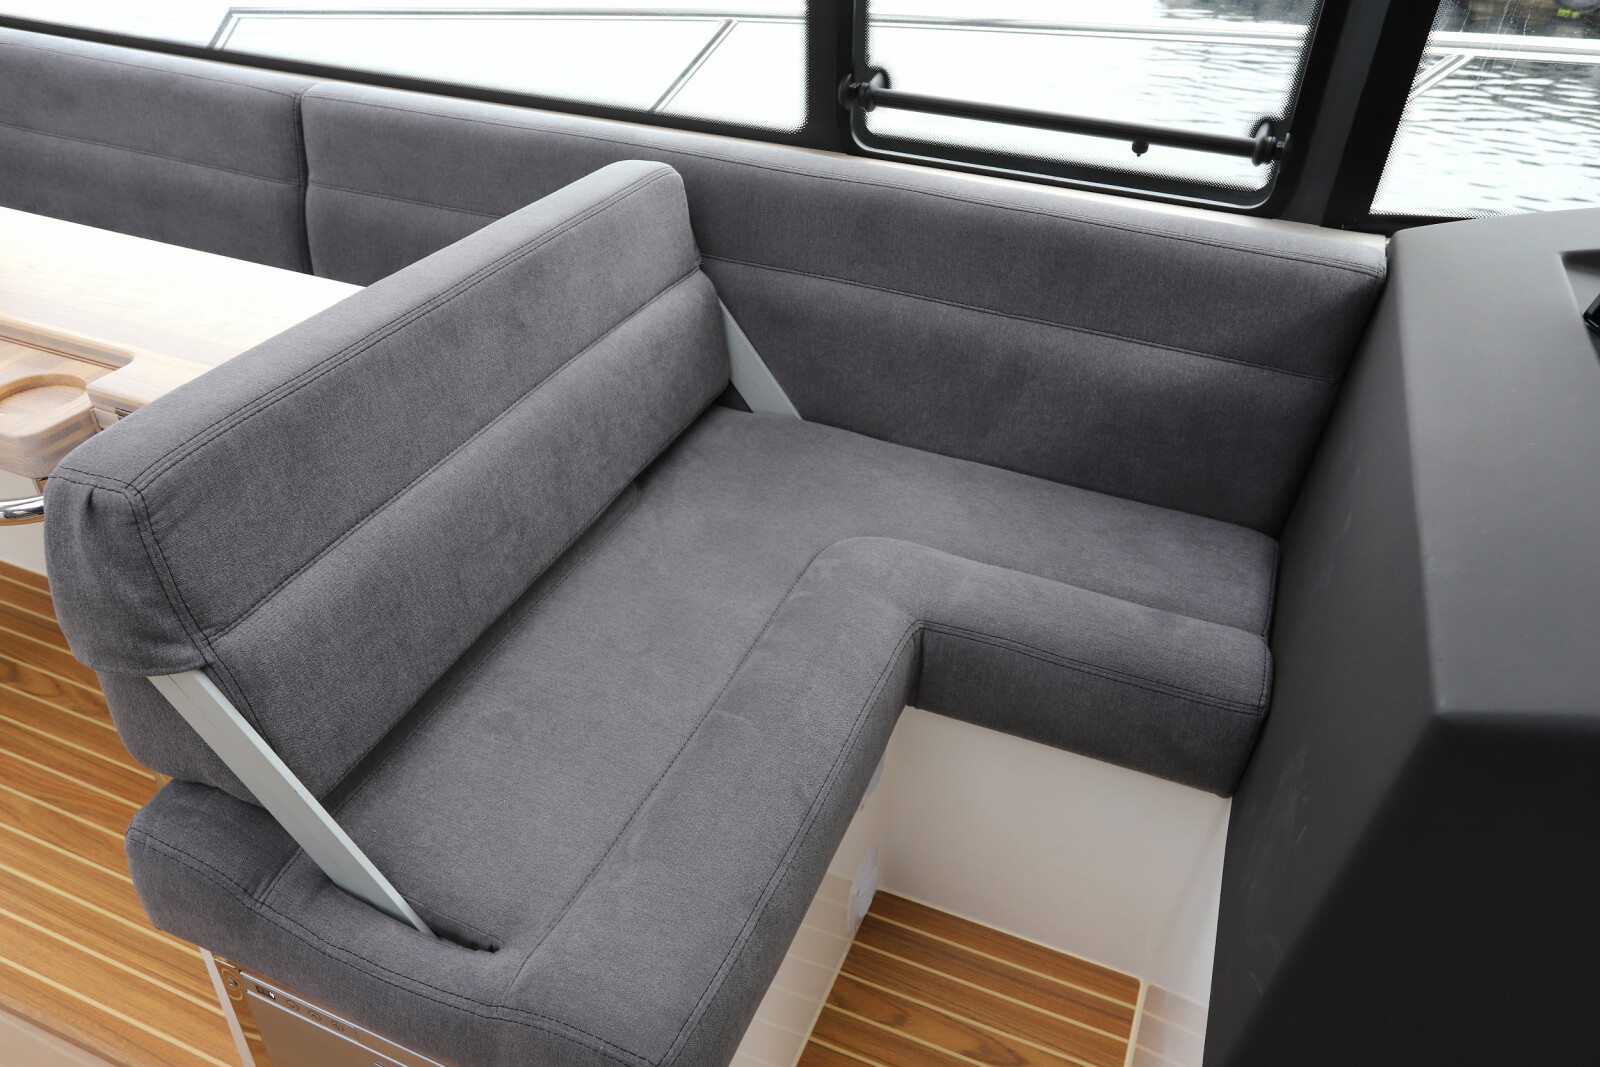 <b>I FARTSRETNING:</b> Den smarte avslutningen på sofagruppen sørger for at det er mange sitteplasser i fartsretningen.